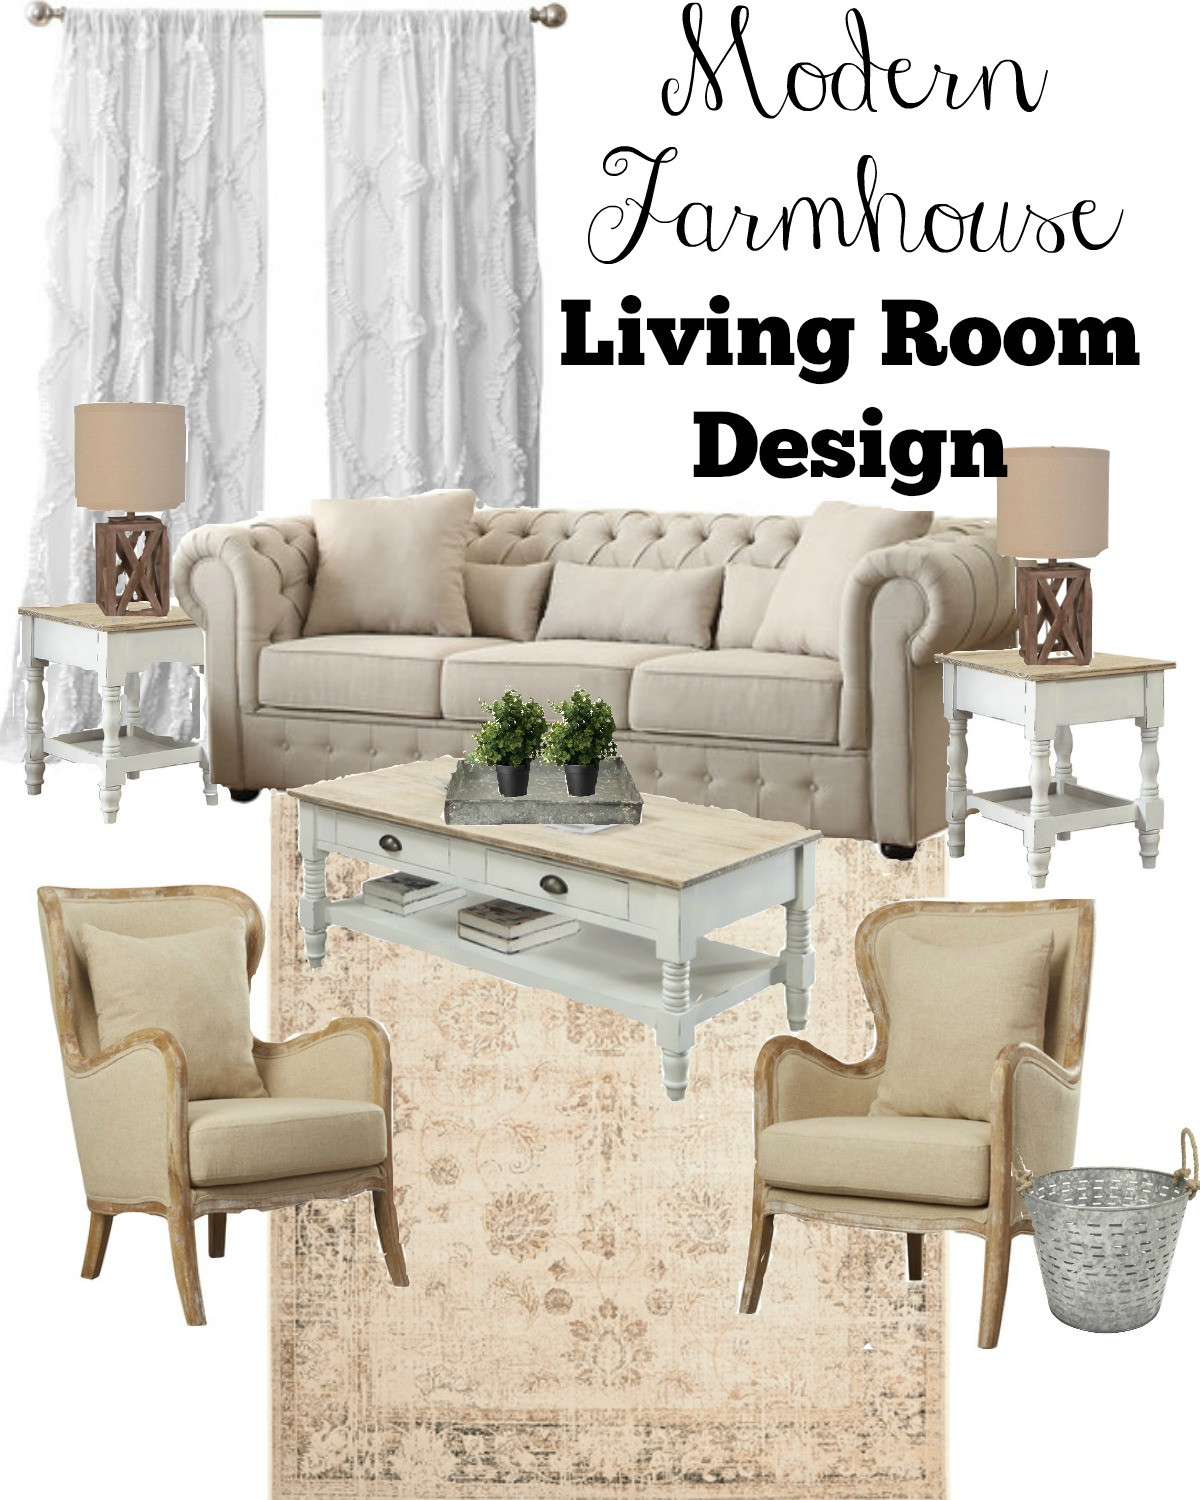 Farmhouse Style Living Room Furniture
 3 Key Tips for a Farmhouse Style Living Room